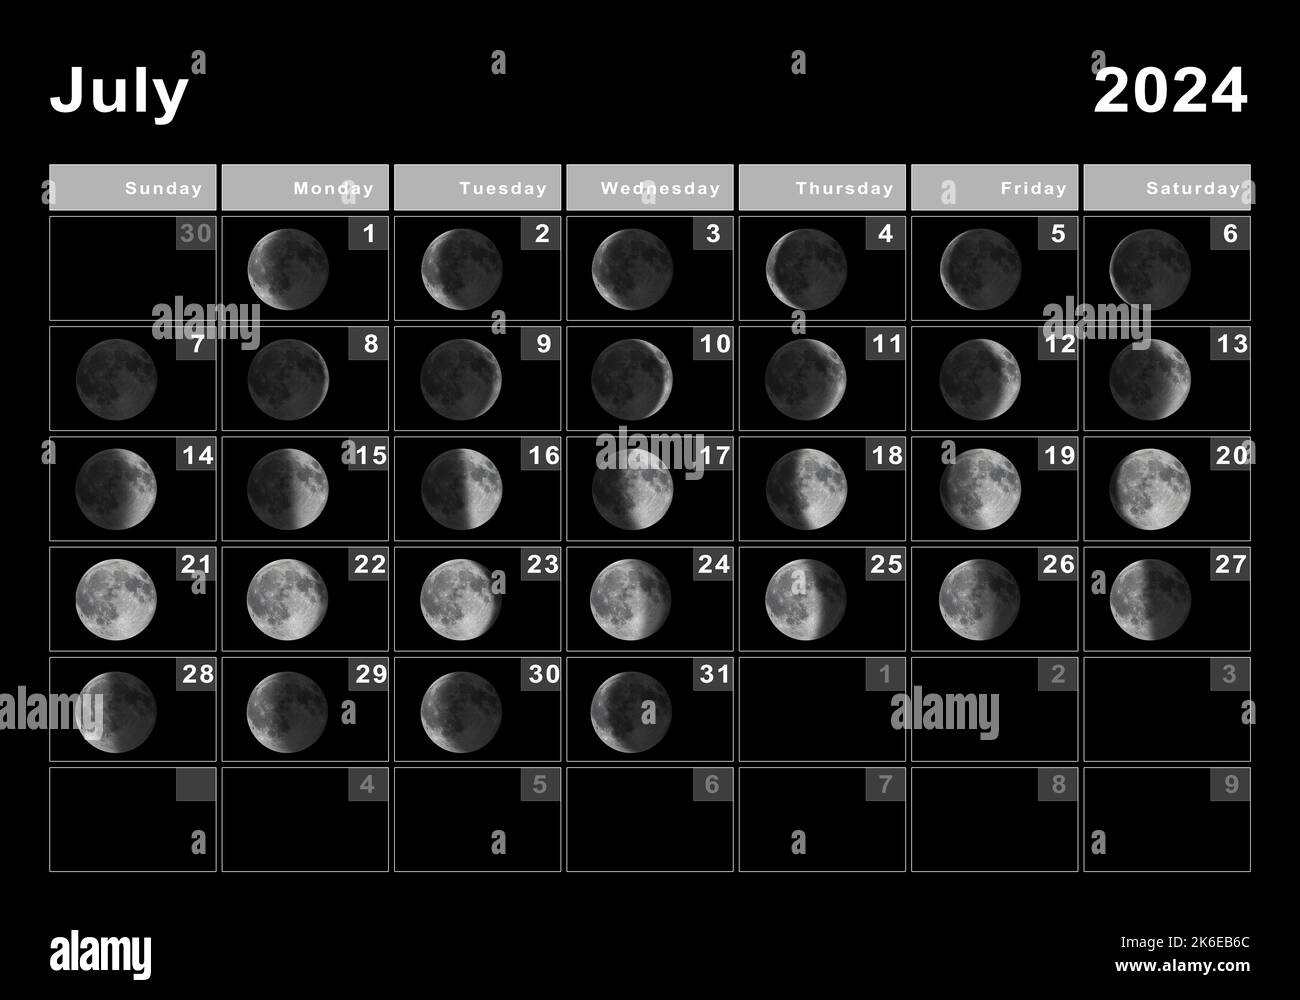 July 2024 Lunar Calendar, Moon Cycles, Moon Phases Stock Photo - Alamy with July 1st Lunar Calendar 2024